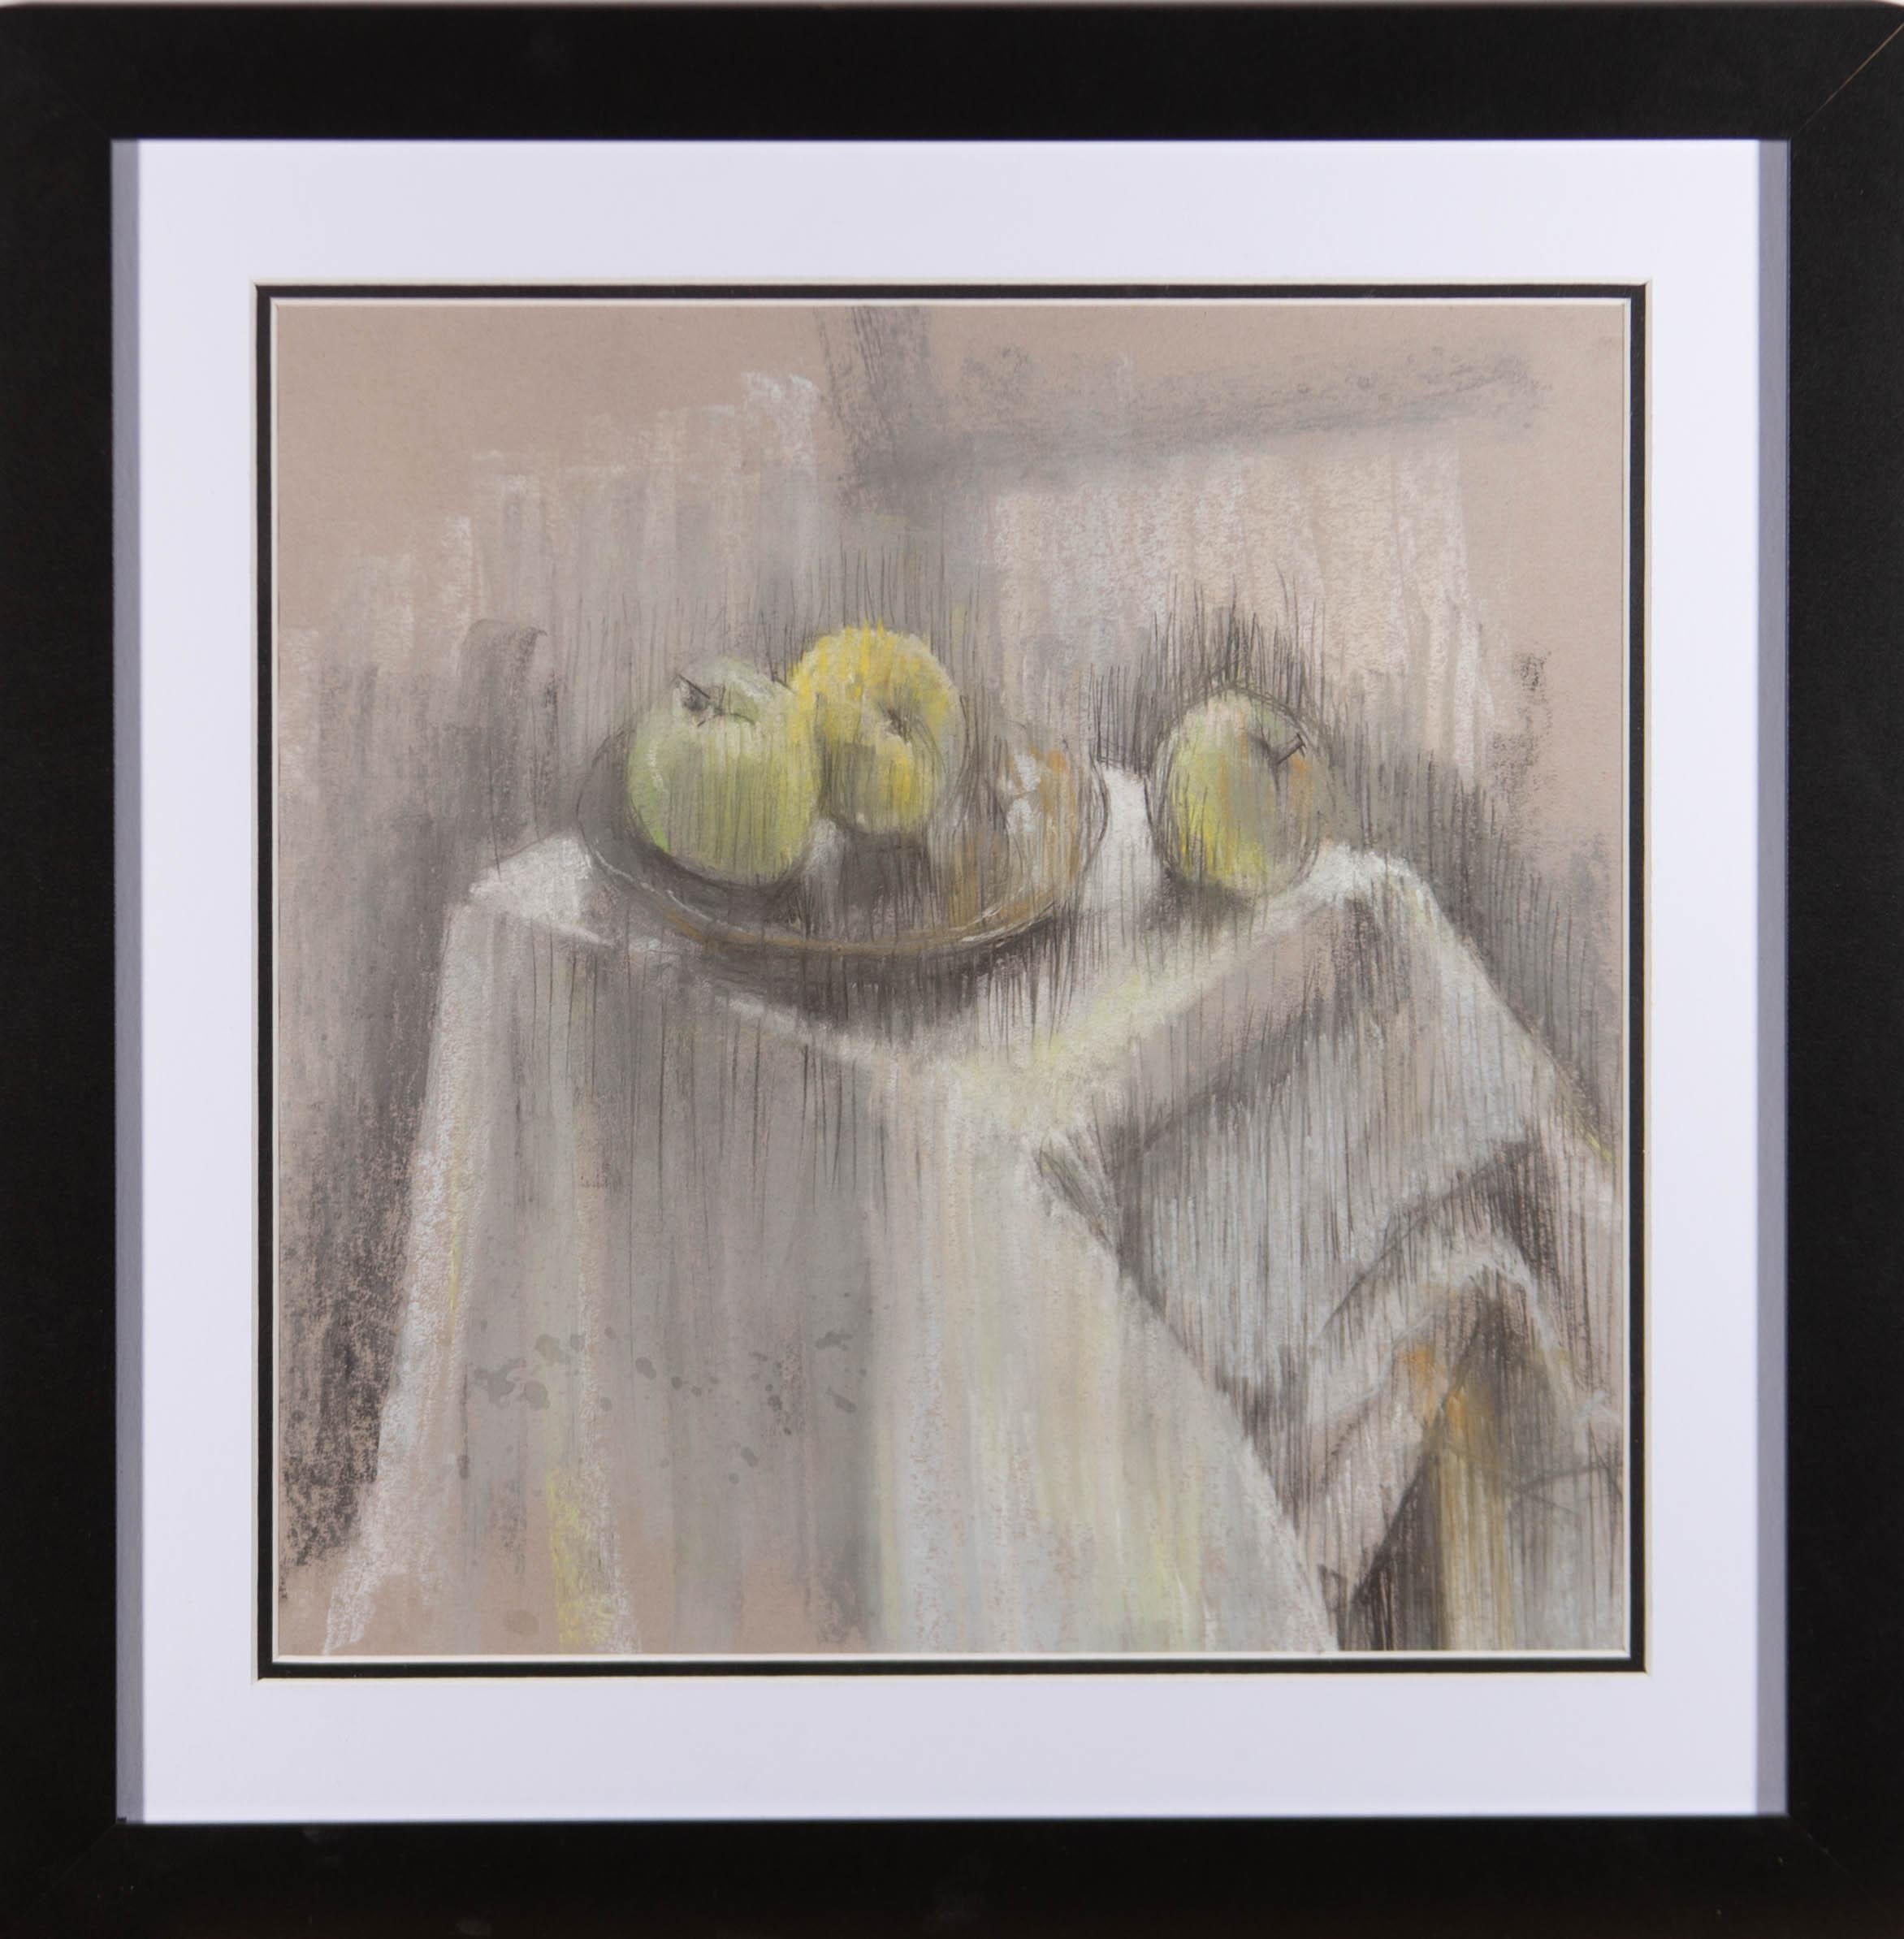 Val Hamer - Pastel contemporain, trois pommes vertes